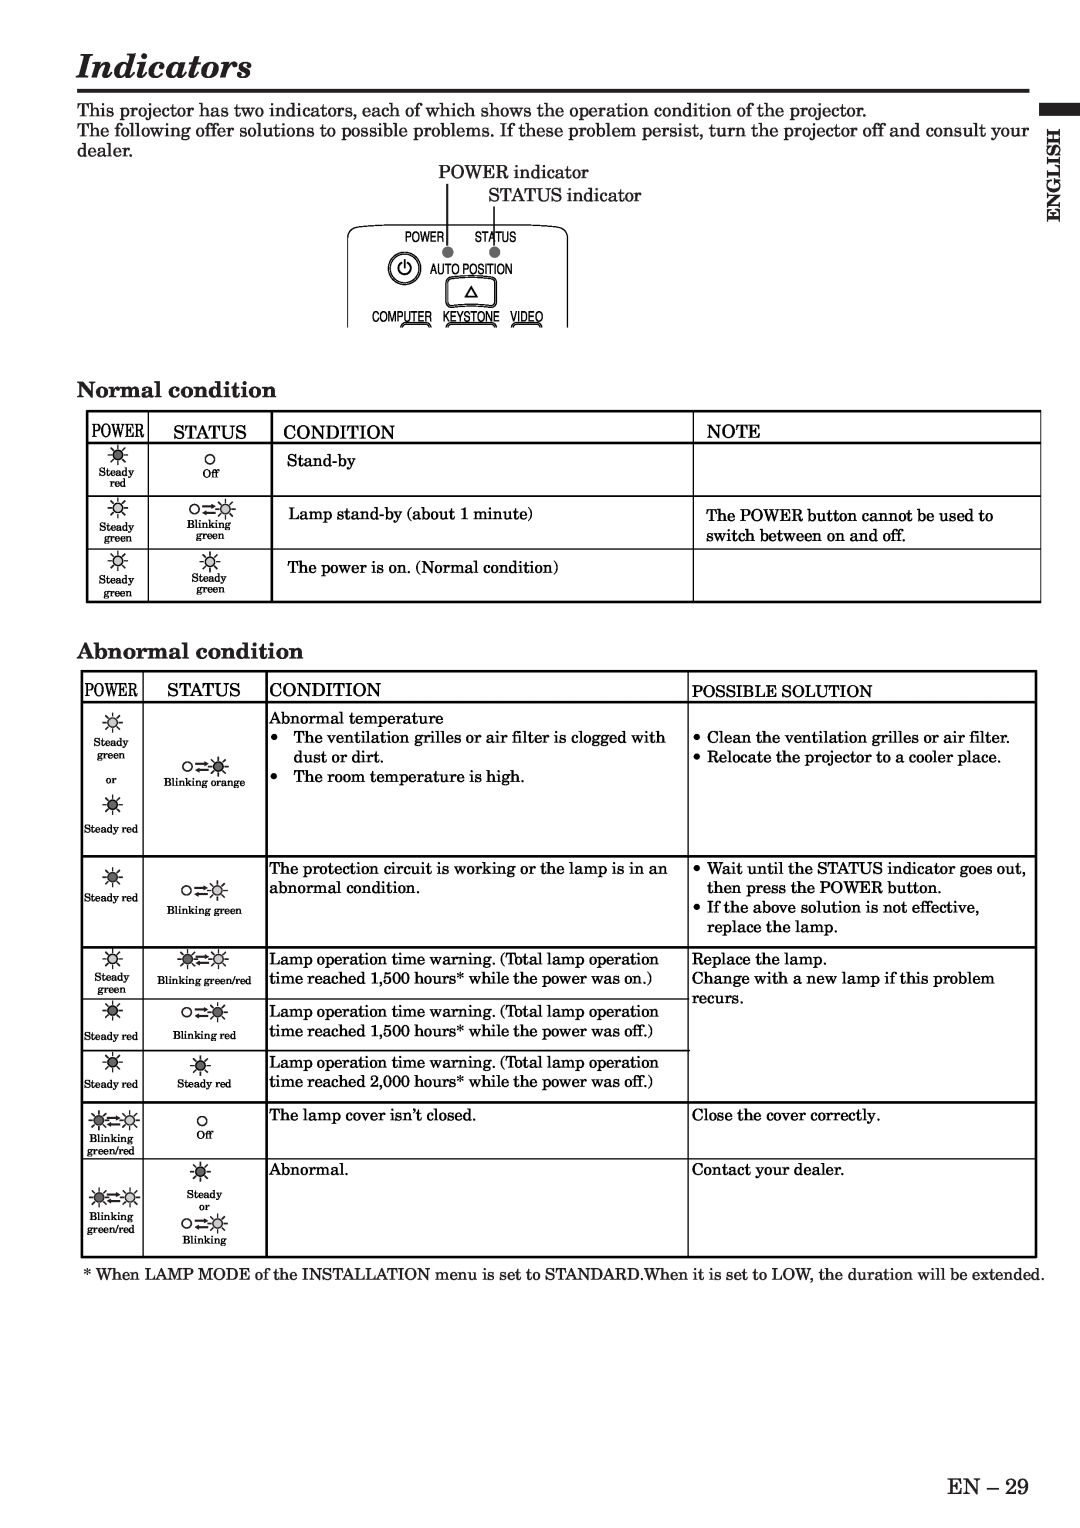 Mitsubishi Electronics SL4U, XL8U user manual Indicators, Normal condition, Abnormal condition, English 